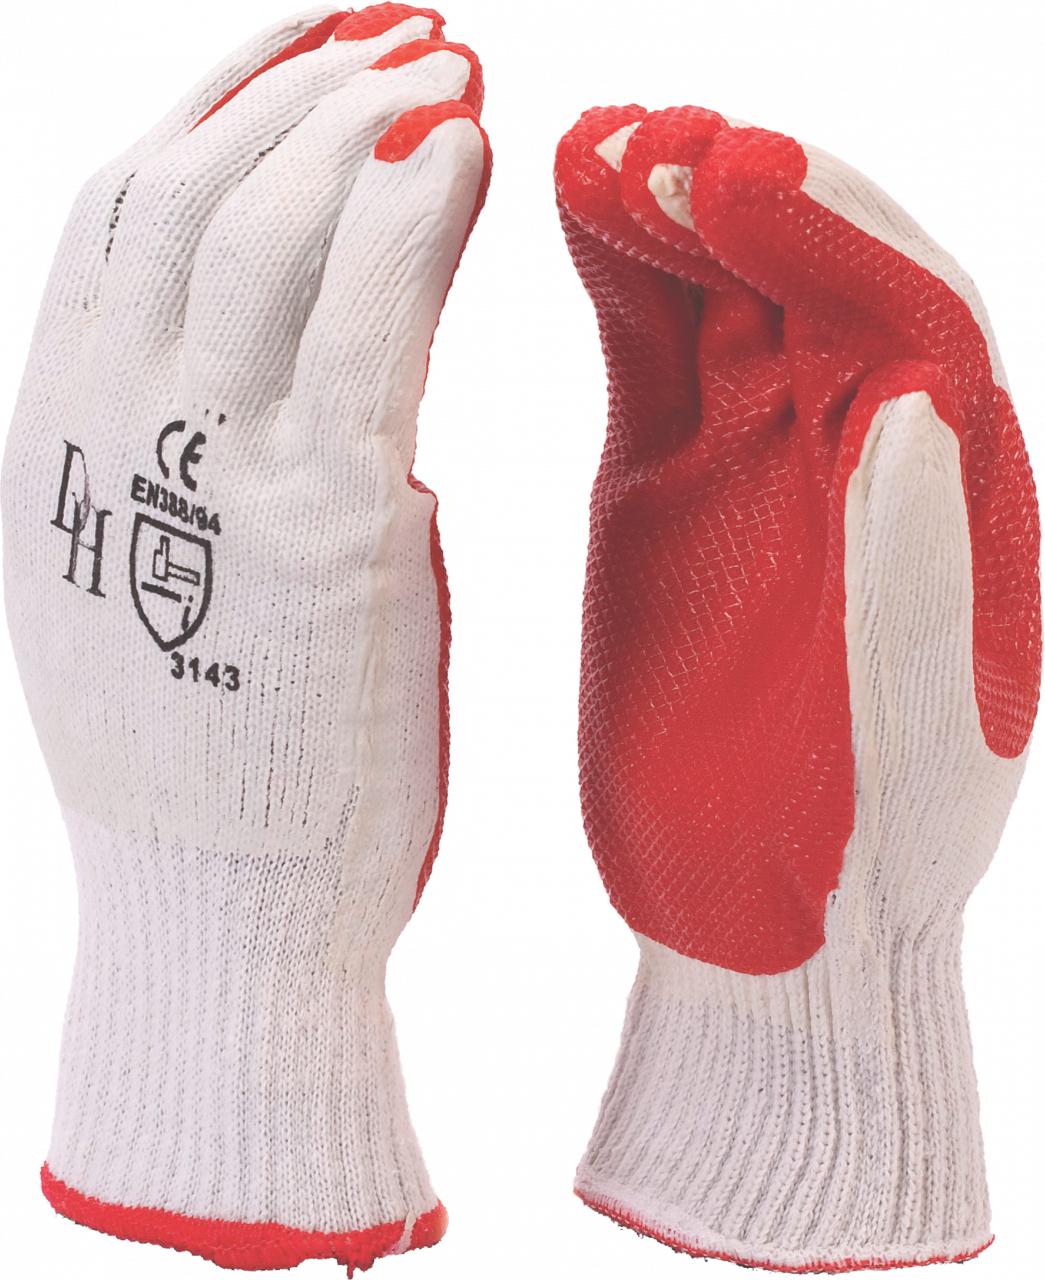 Cotton Protective Gloves CrayFish Rubber Liner Orange